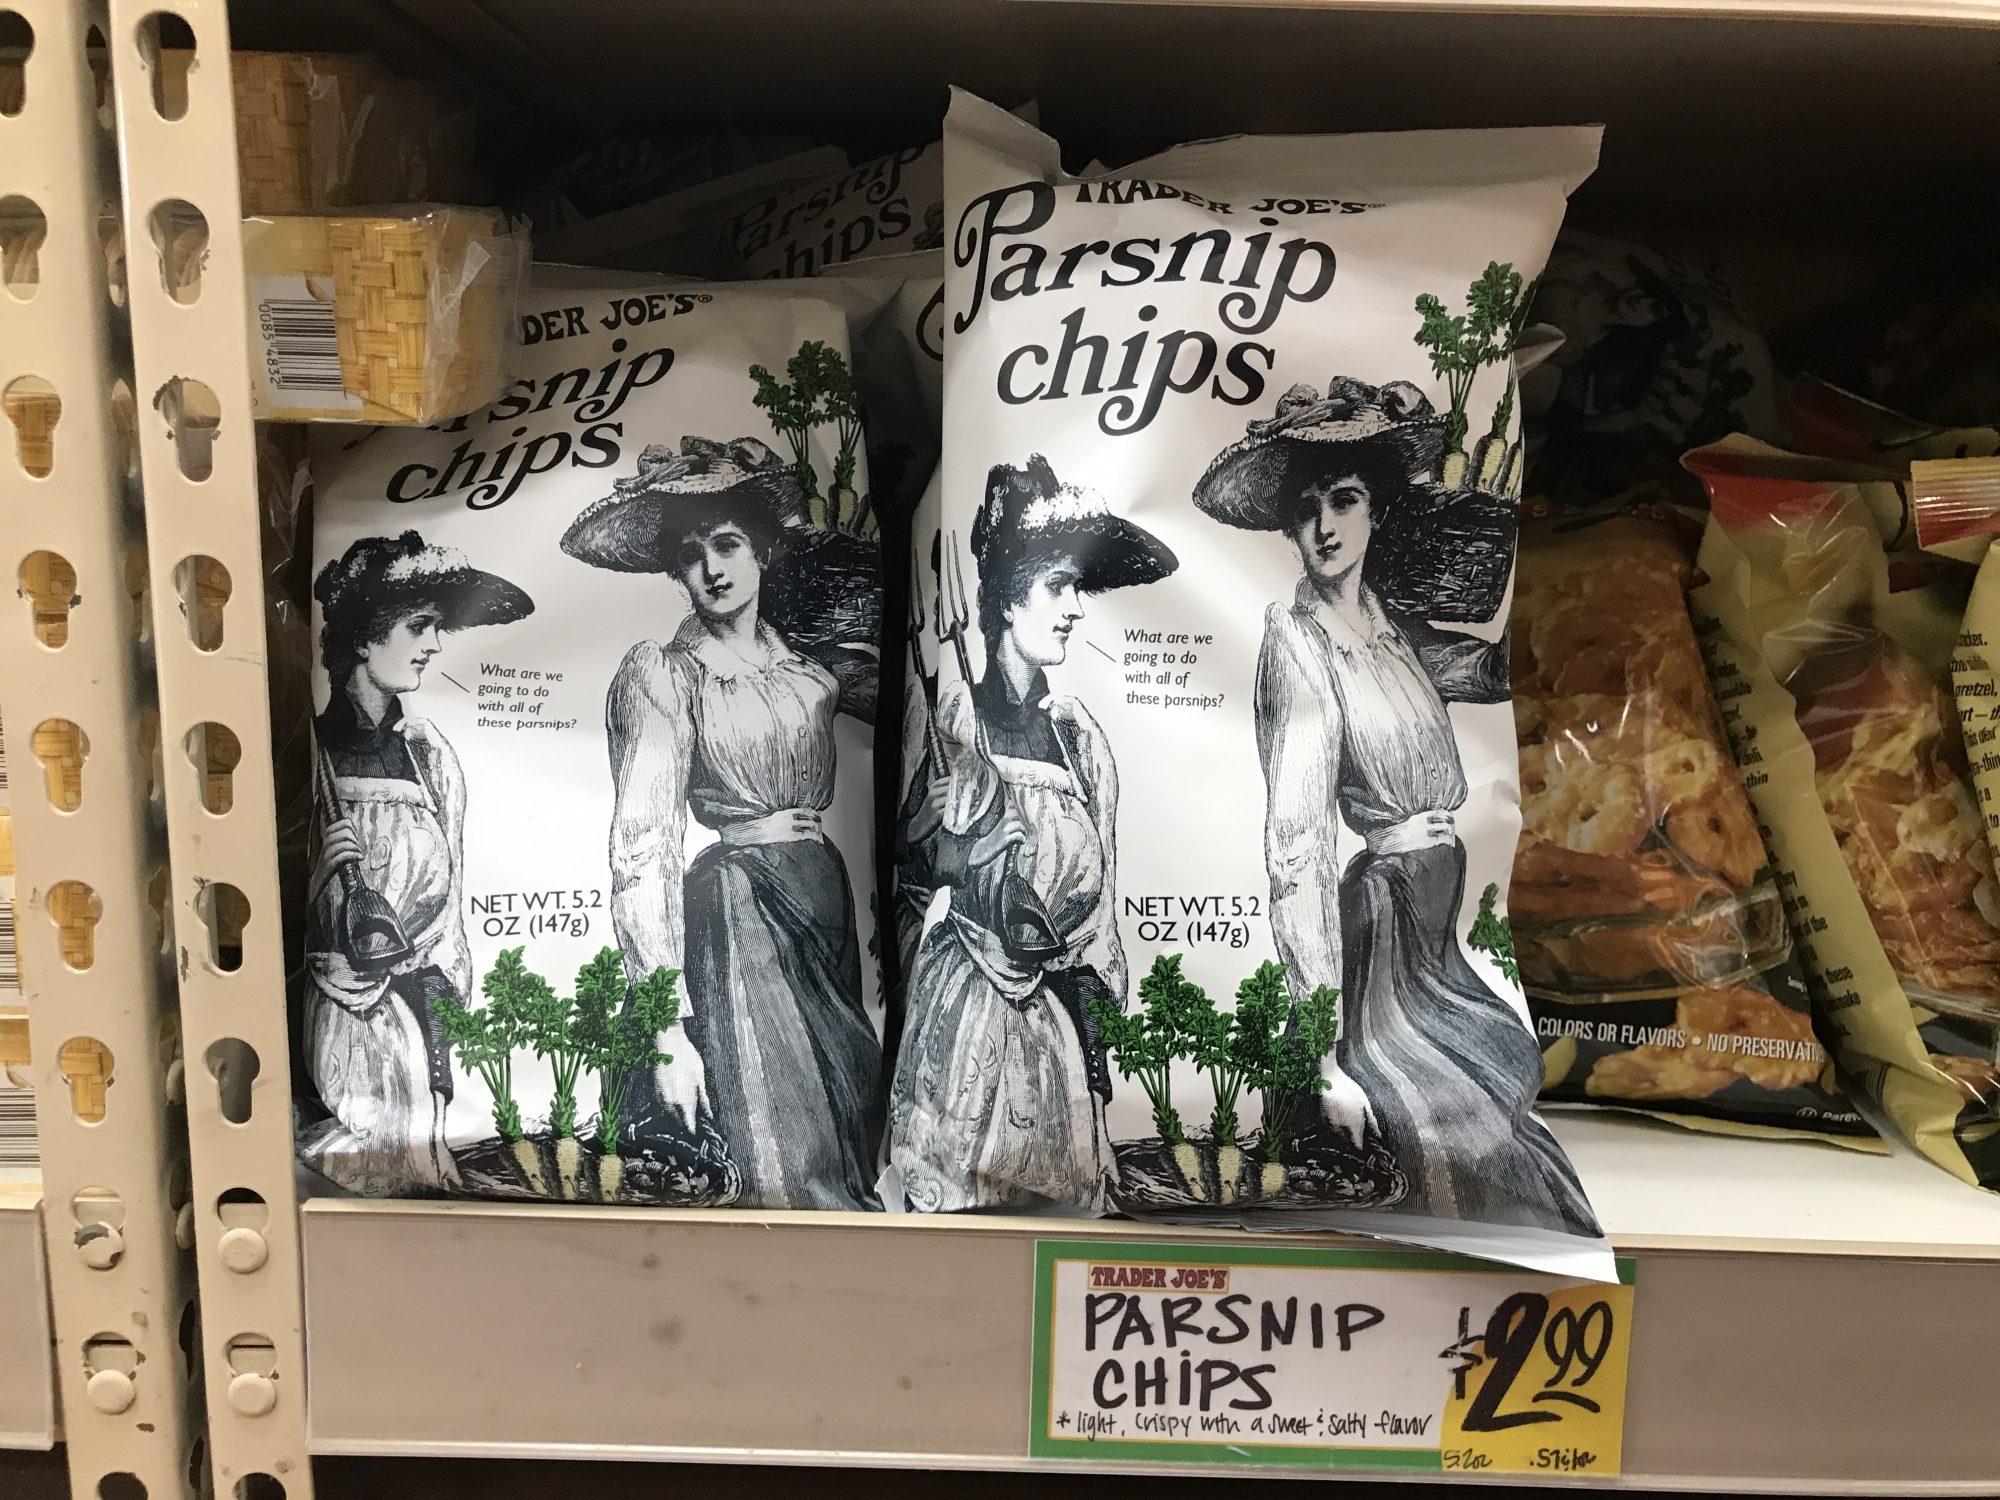 TJ Parsnip Chips